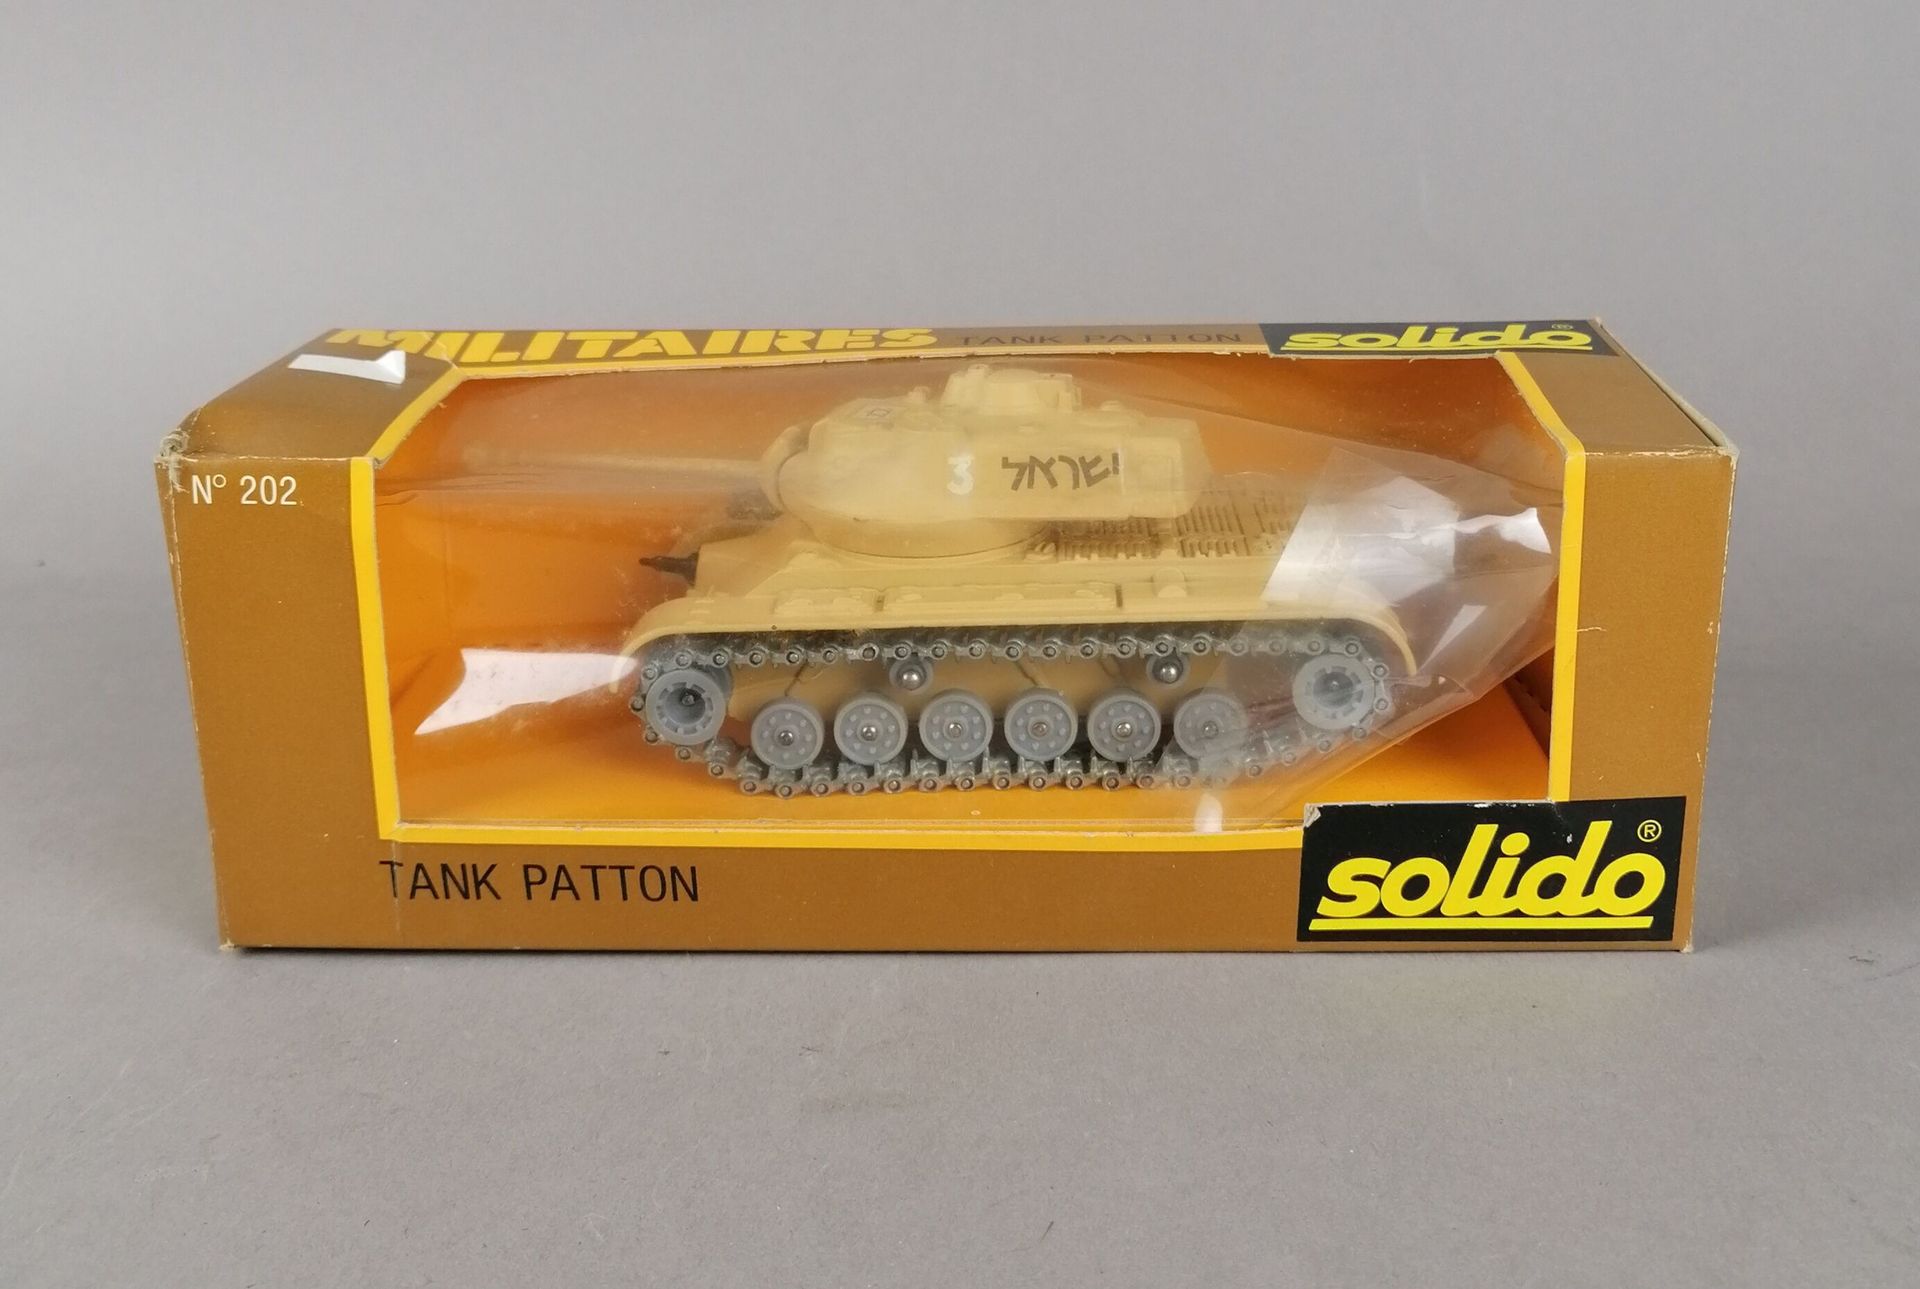 Null SOLIDO - Collection Militaires, Tank Patton n°202, échelle 1/43, dans sa bo&hellip;